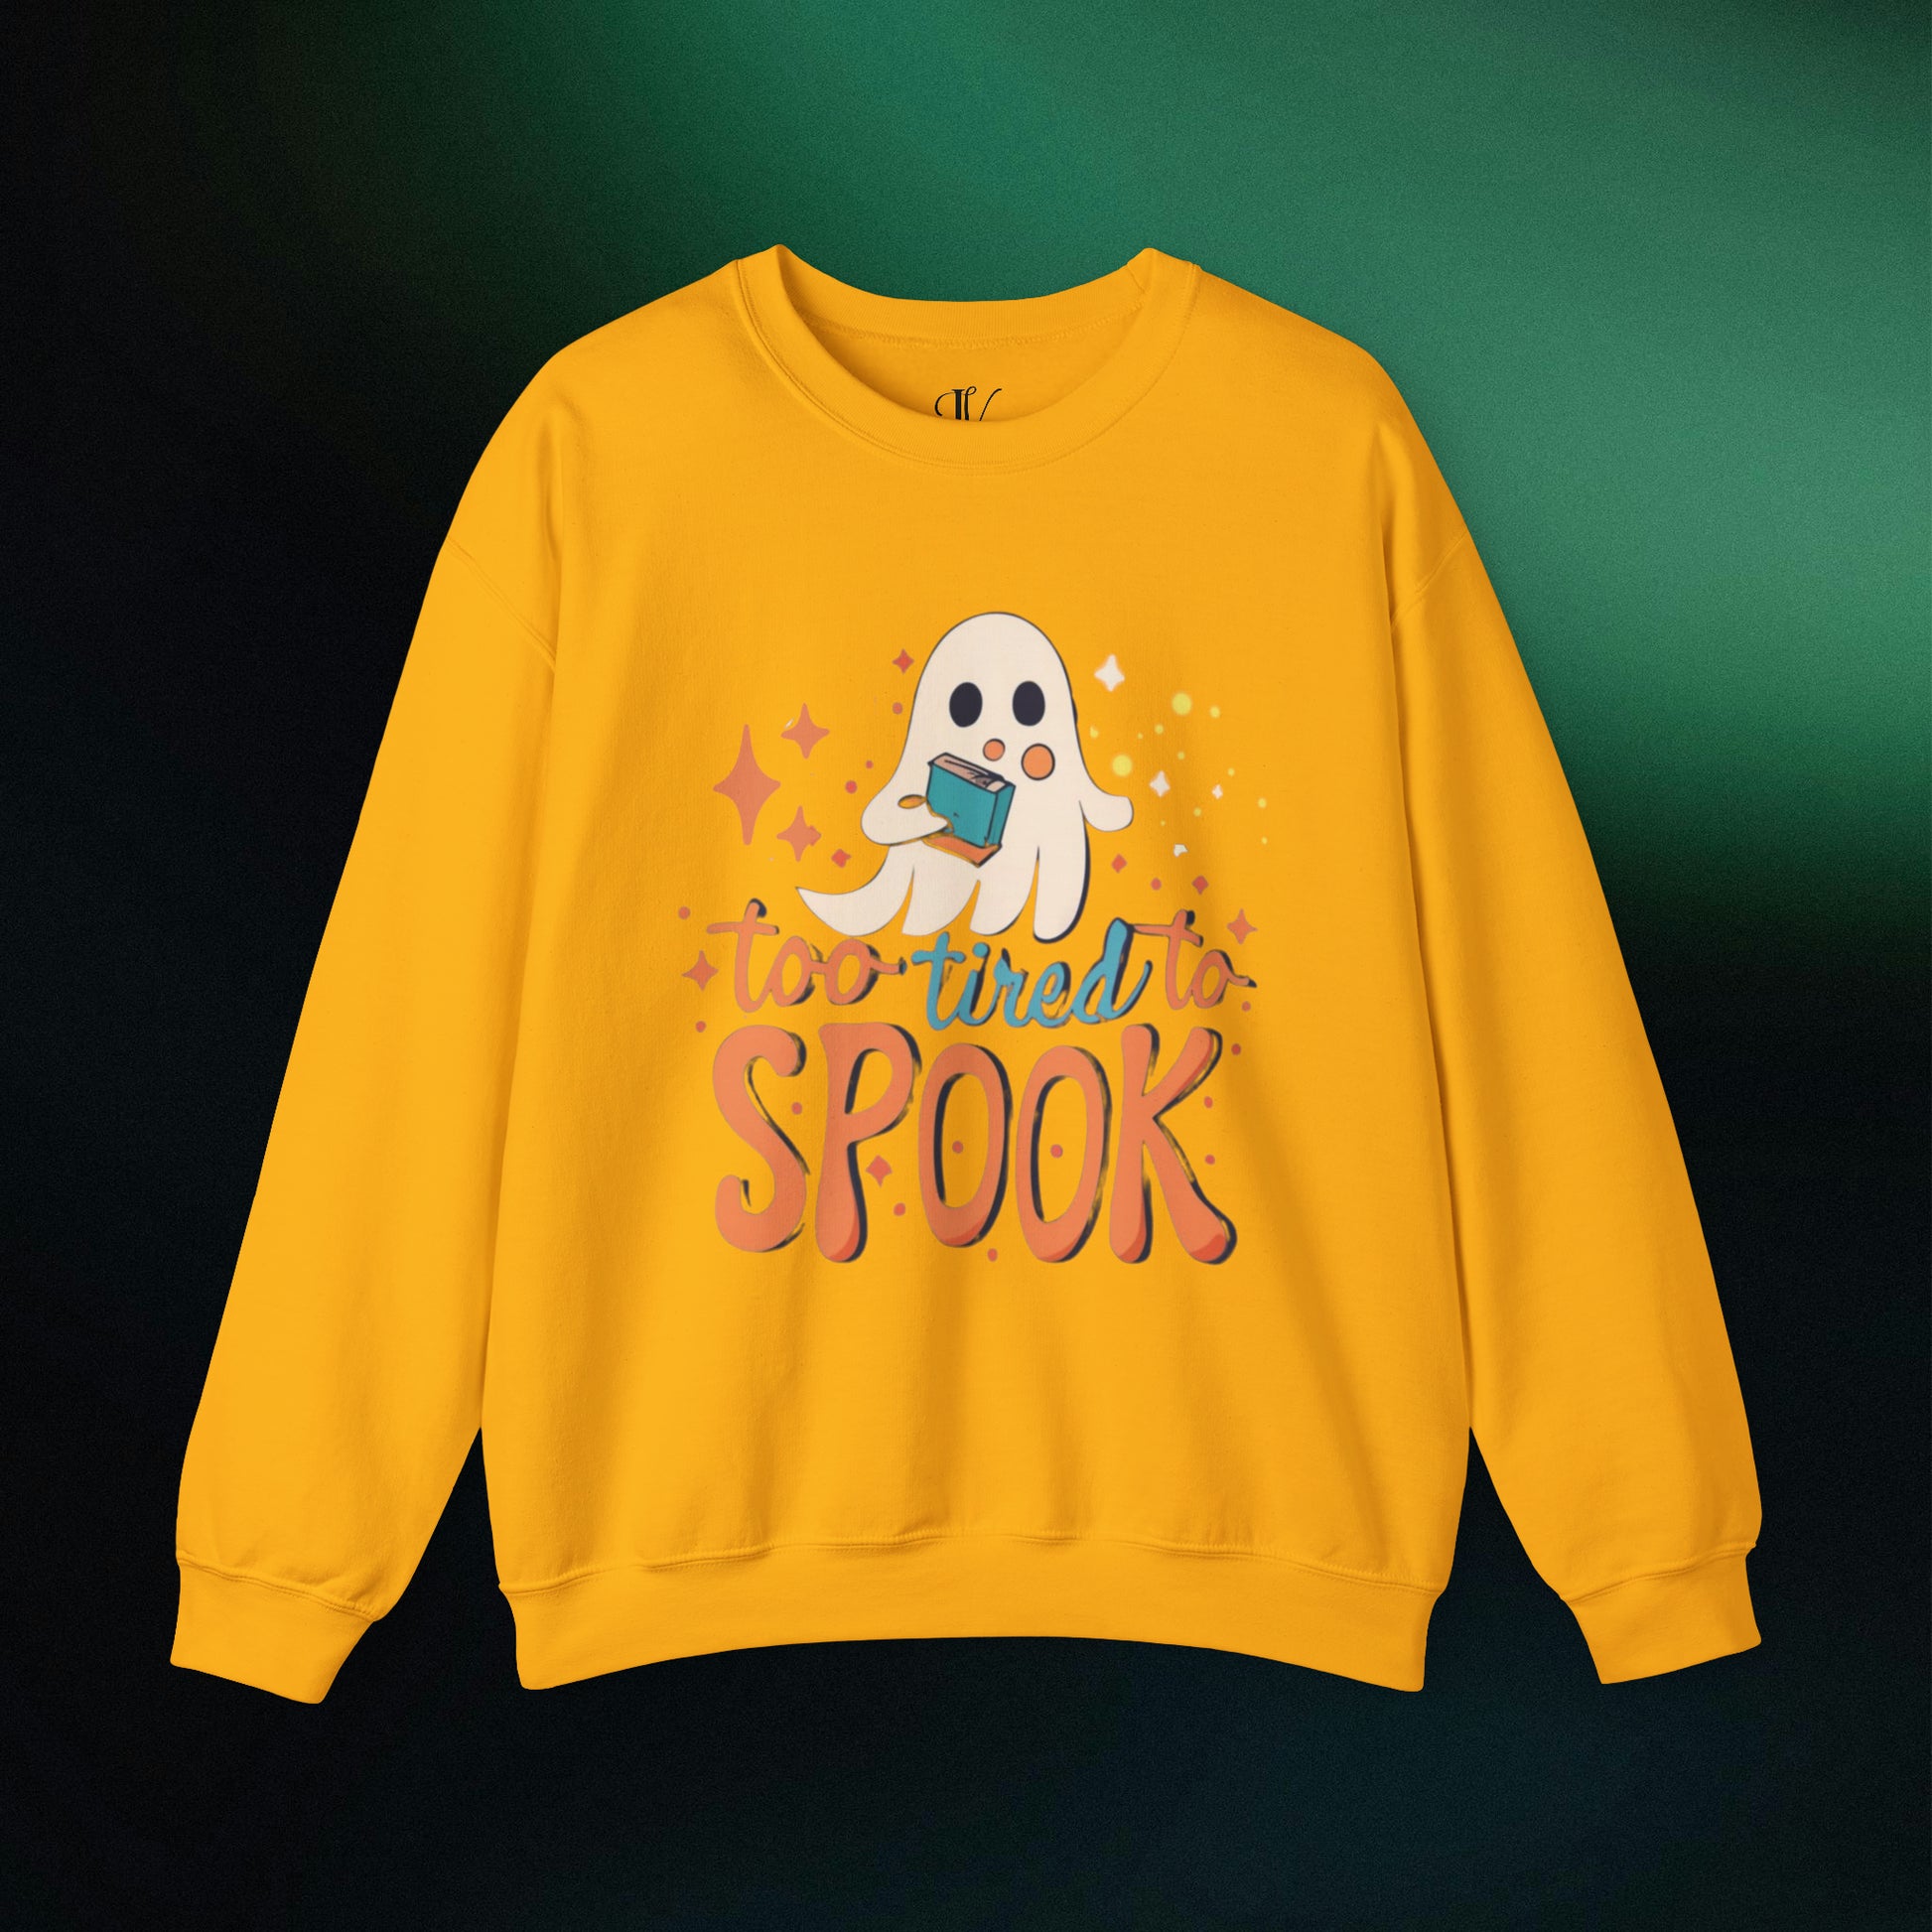 Ghost Reading Books Sweater | Bookish Halloween Sweatshirt - Halloween Teacher Gift, Librarian Halloween Hoodie, Ghost Crewneck - 'Too Tired to Spook' Sweatshirt S Gold 